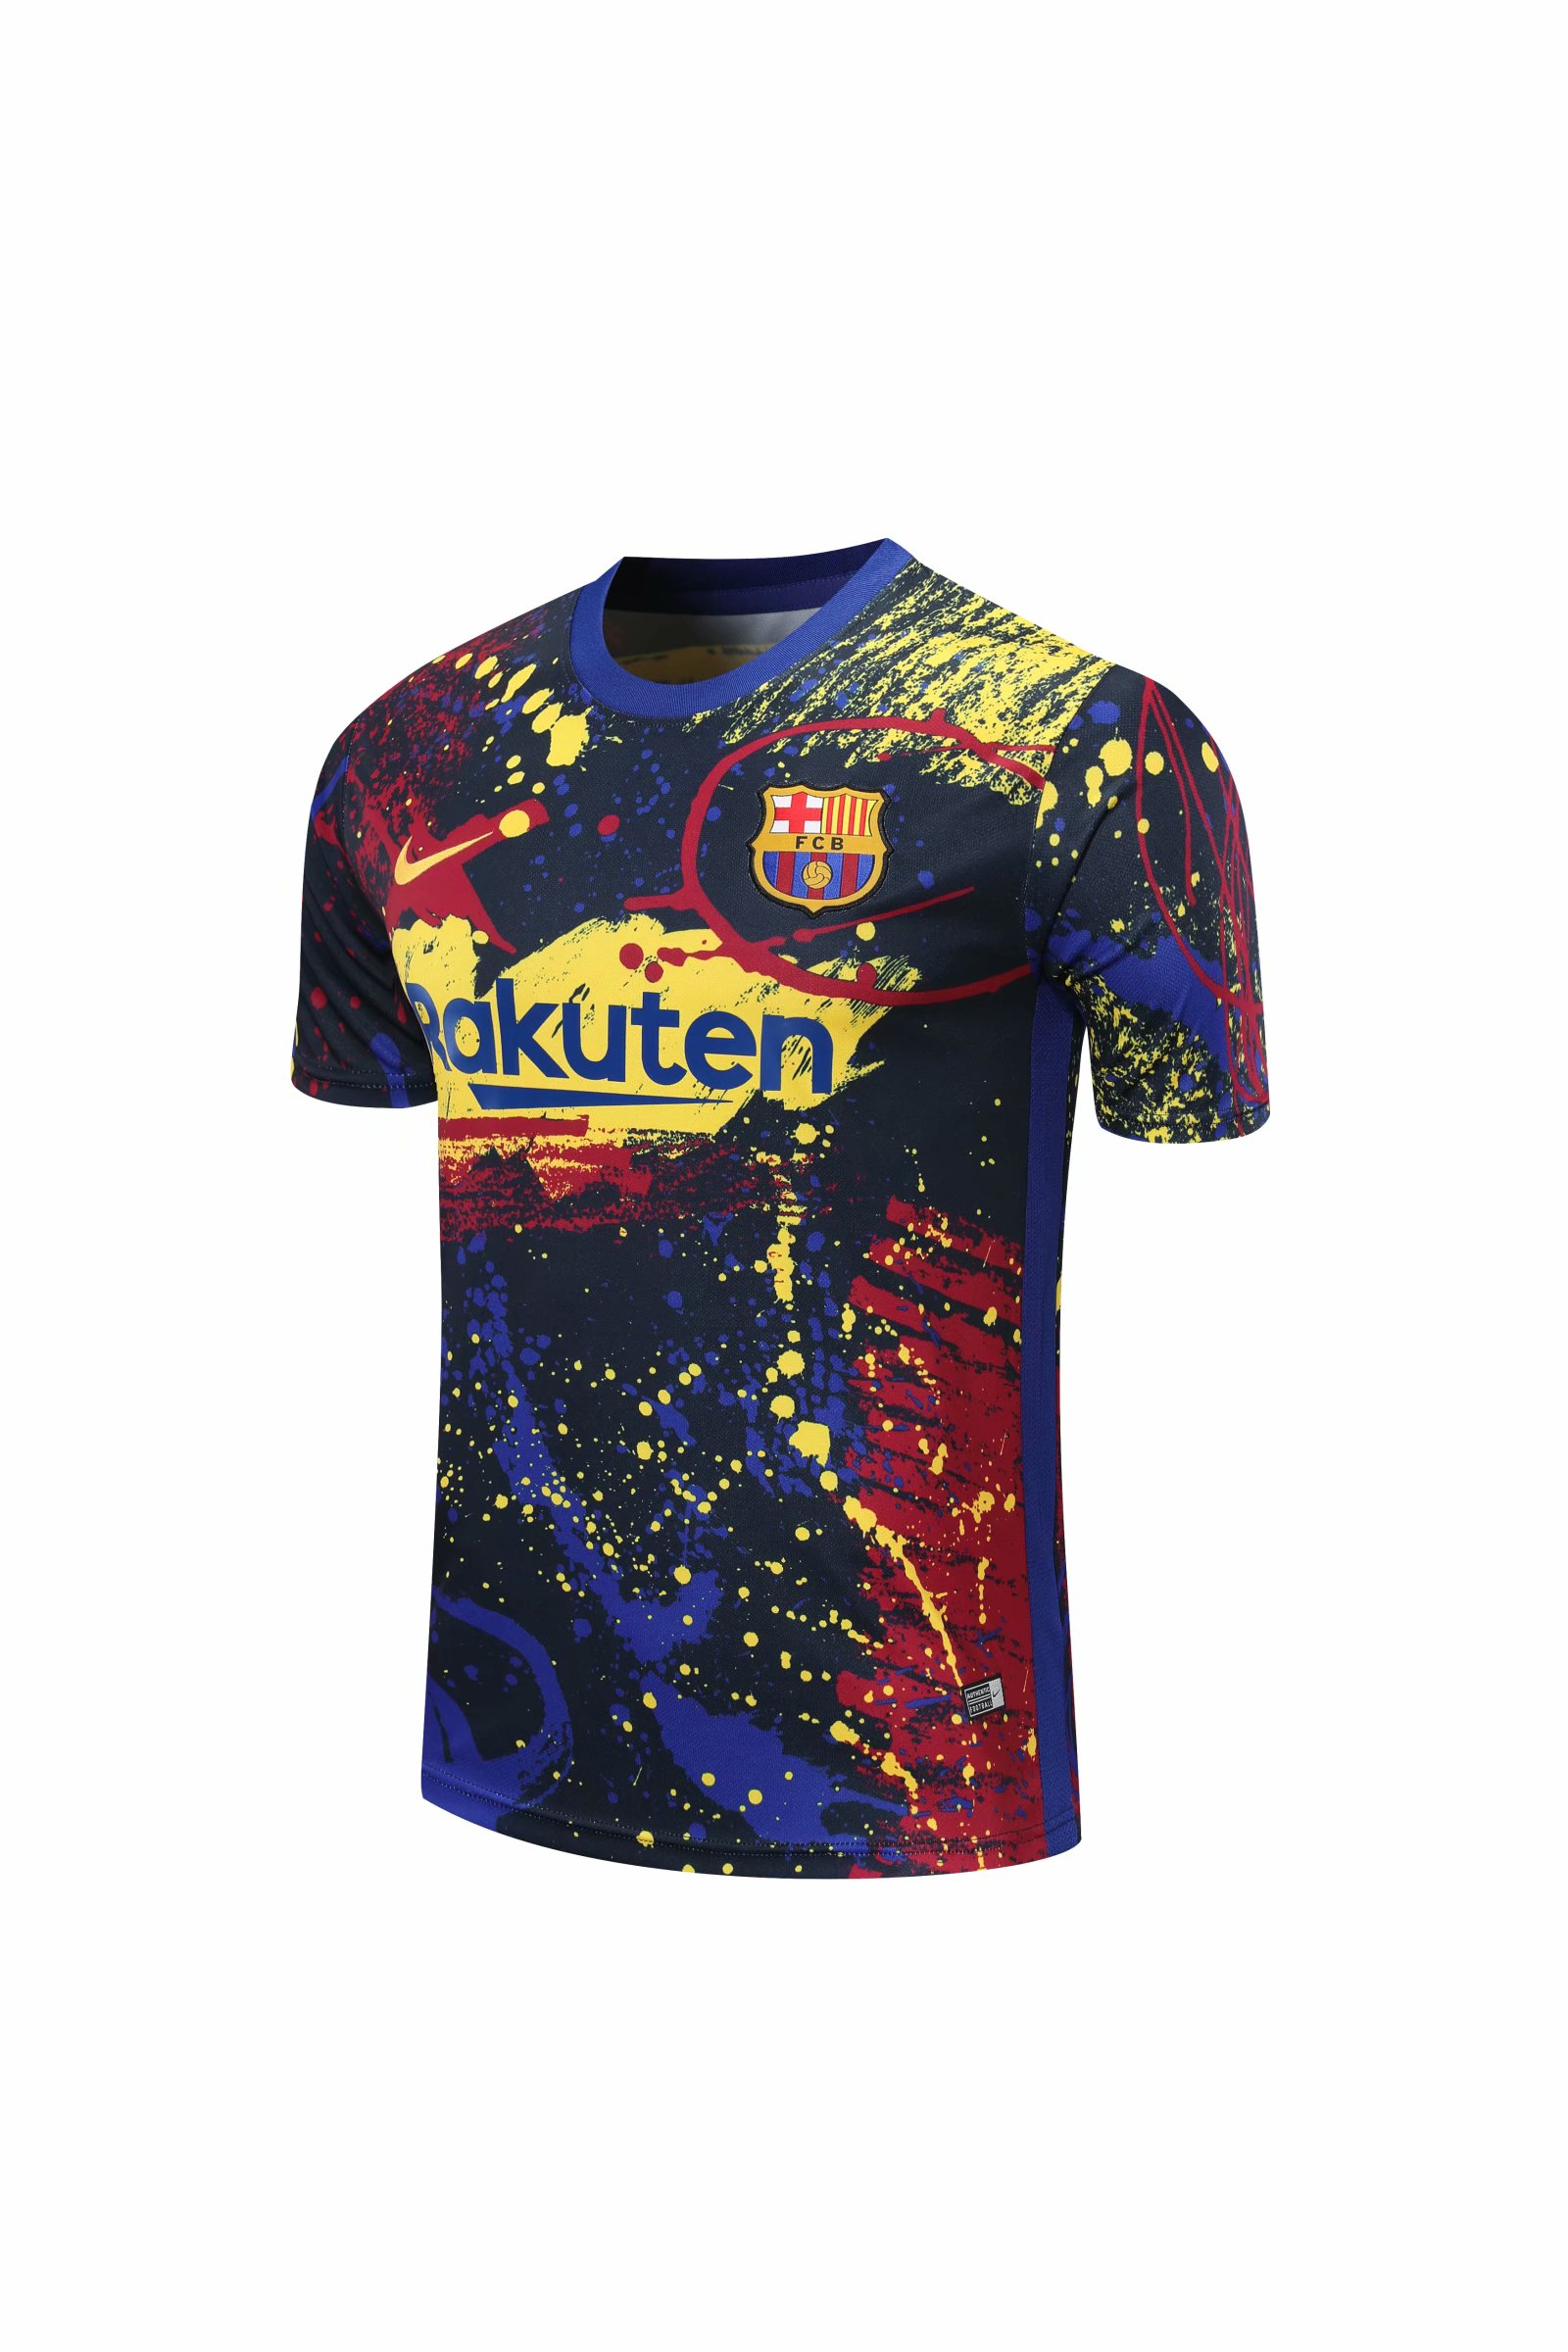 Barcelona Home 2020-2021 soccer jersey